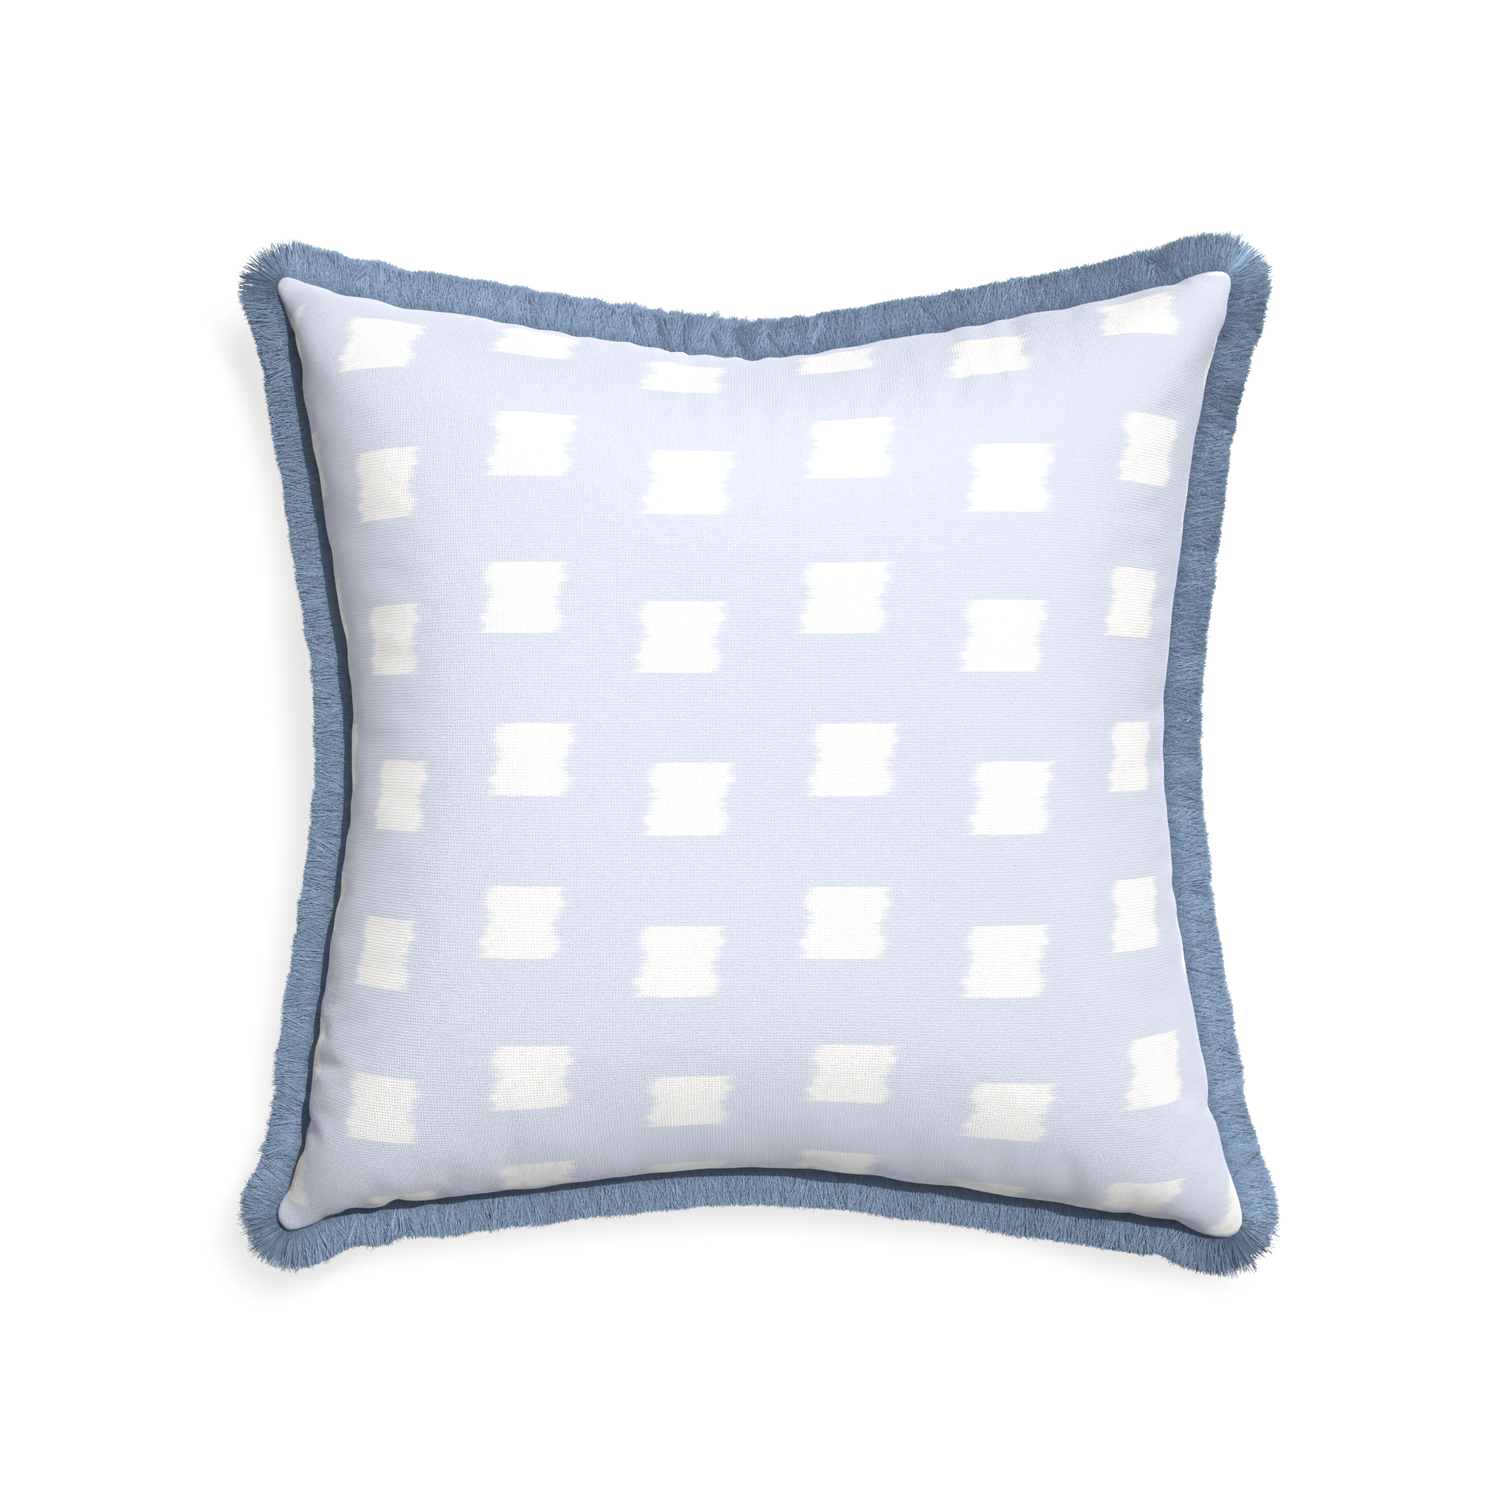 22-square denton custom sky blue patternpillow with sky fringe on white background